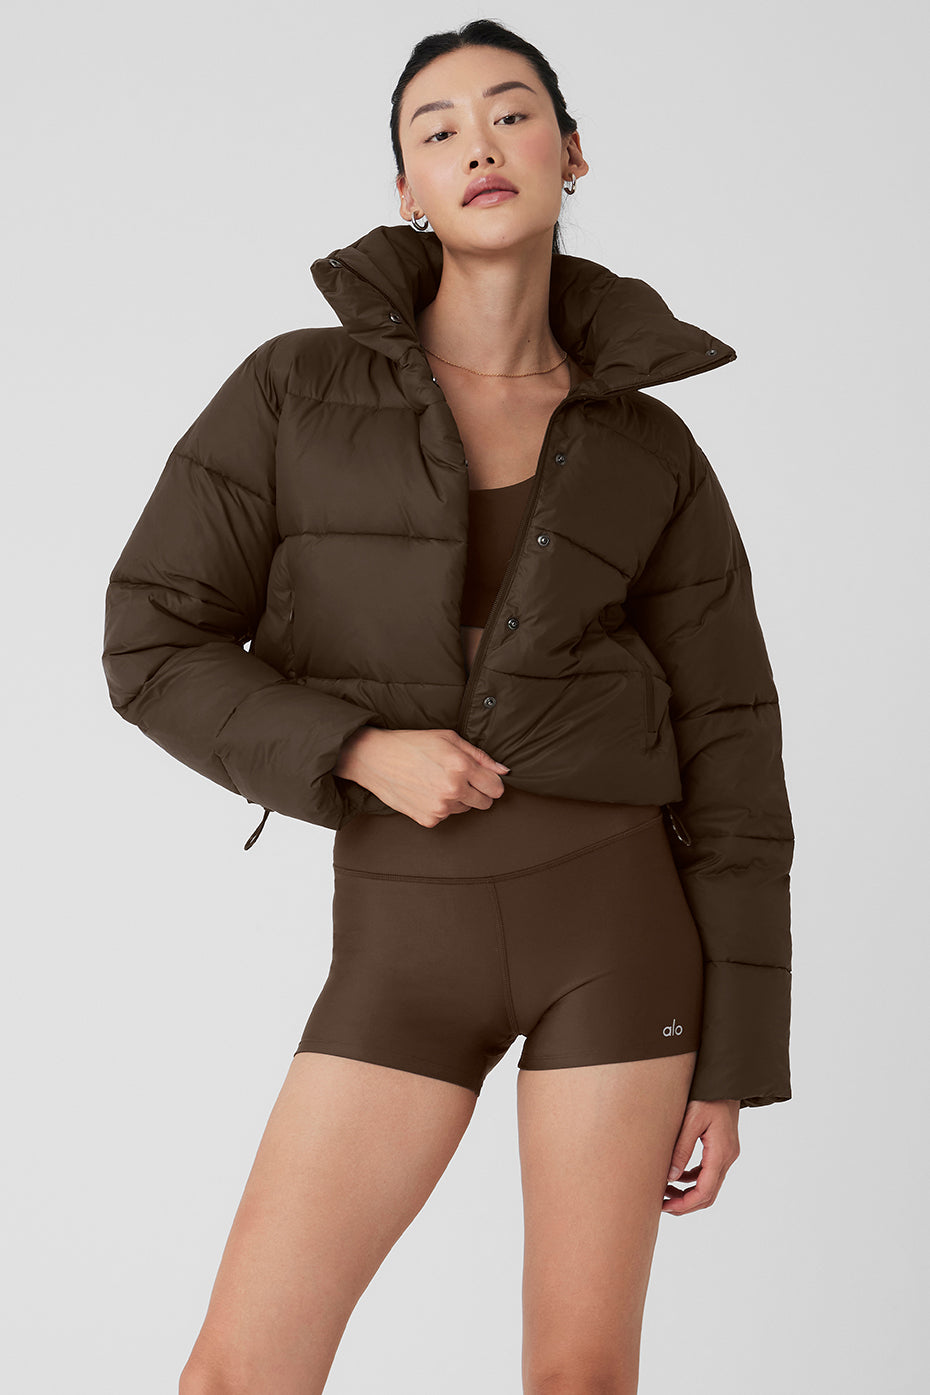 Alo Yoga Flurry Sherpa Jacket Faux Fur Jacket - Neutrals Jackets